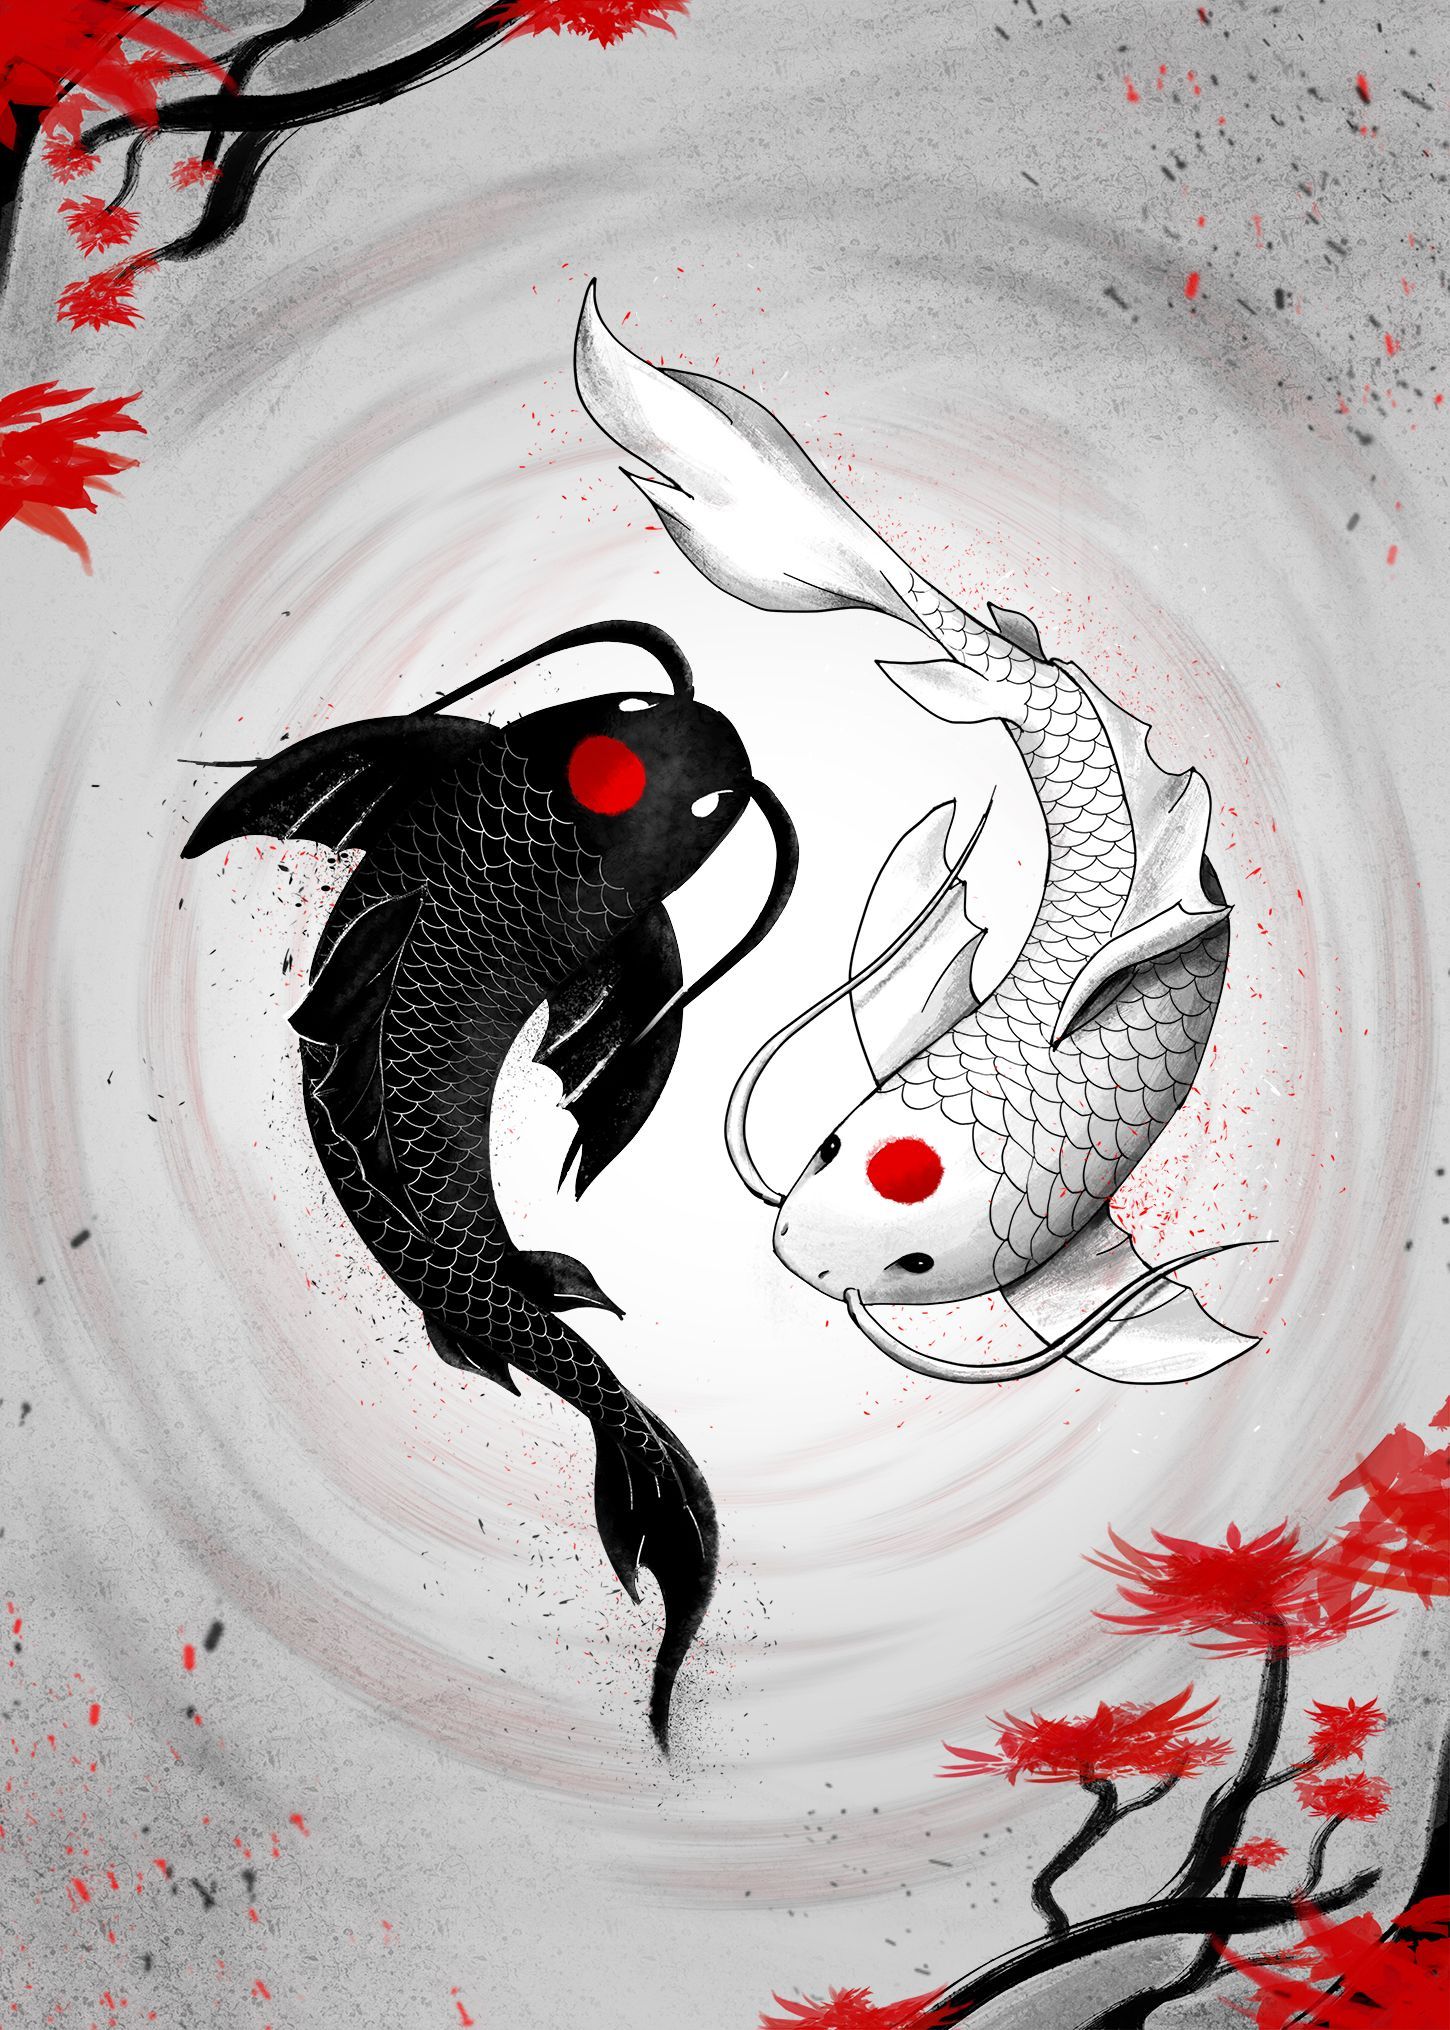 80 Yin Yang Fish Wallpaper Hd Pictures - MyWeb